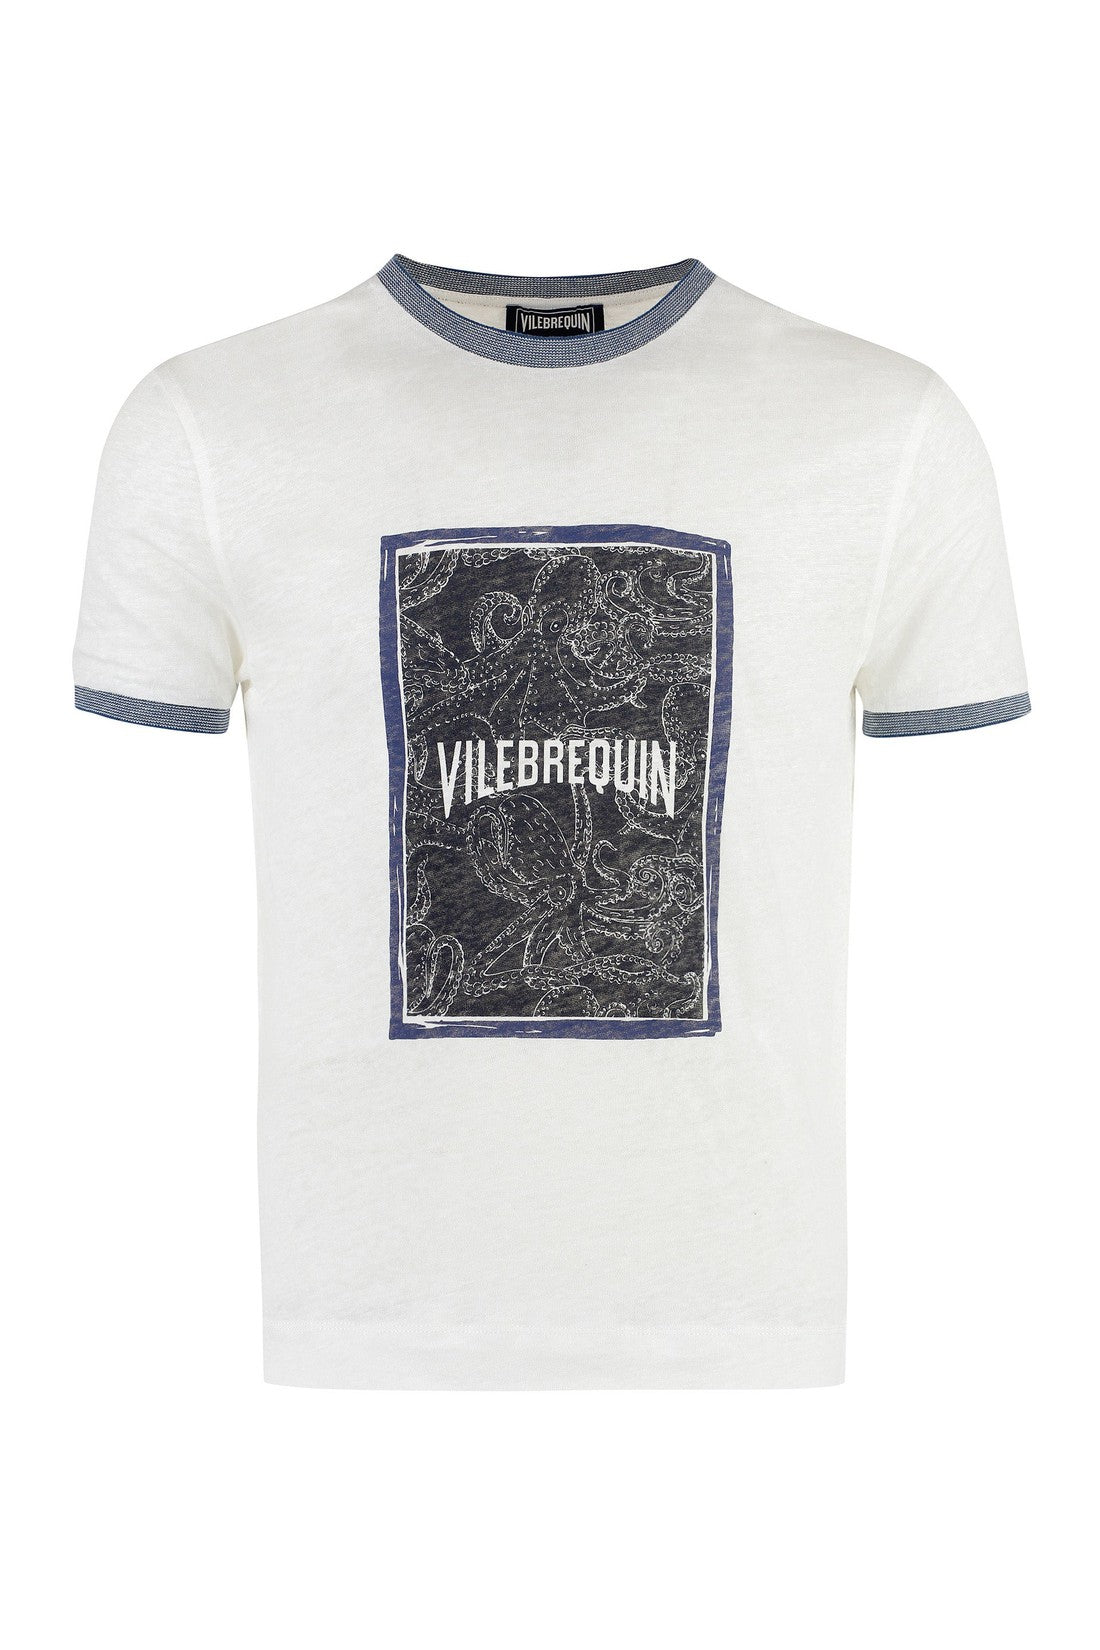 Vilebrequin-OUTLET-SALE-Printed wool t-shirt-ARCHIVIST